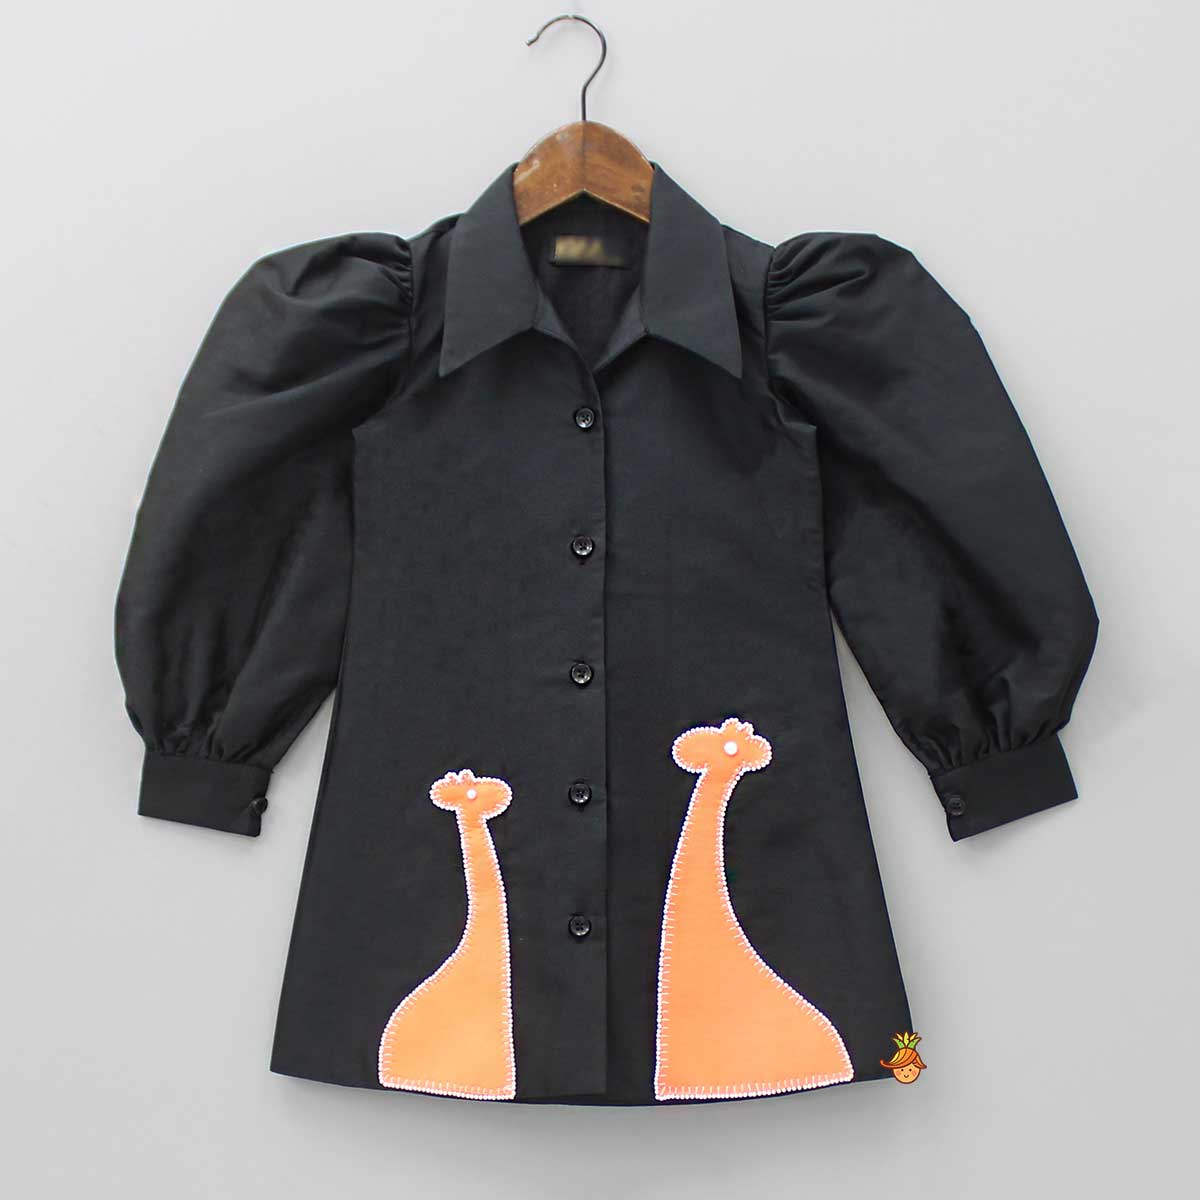 Giraffe Embroidered Black Collared Neck Dress